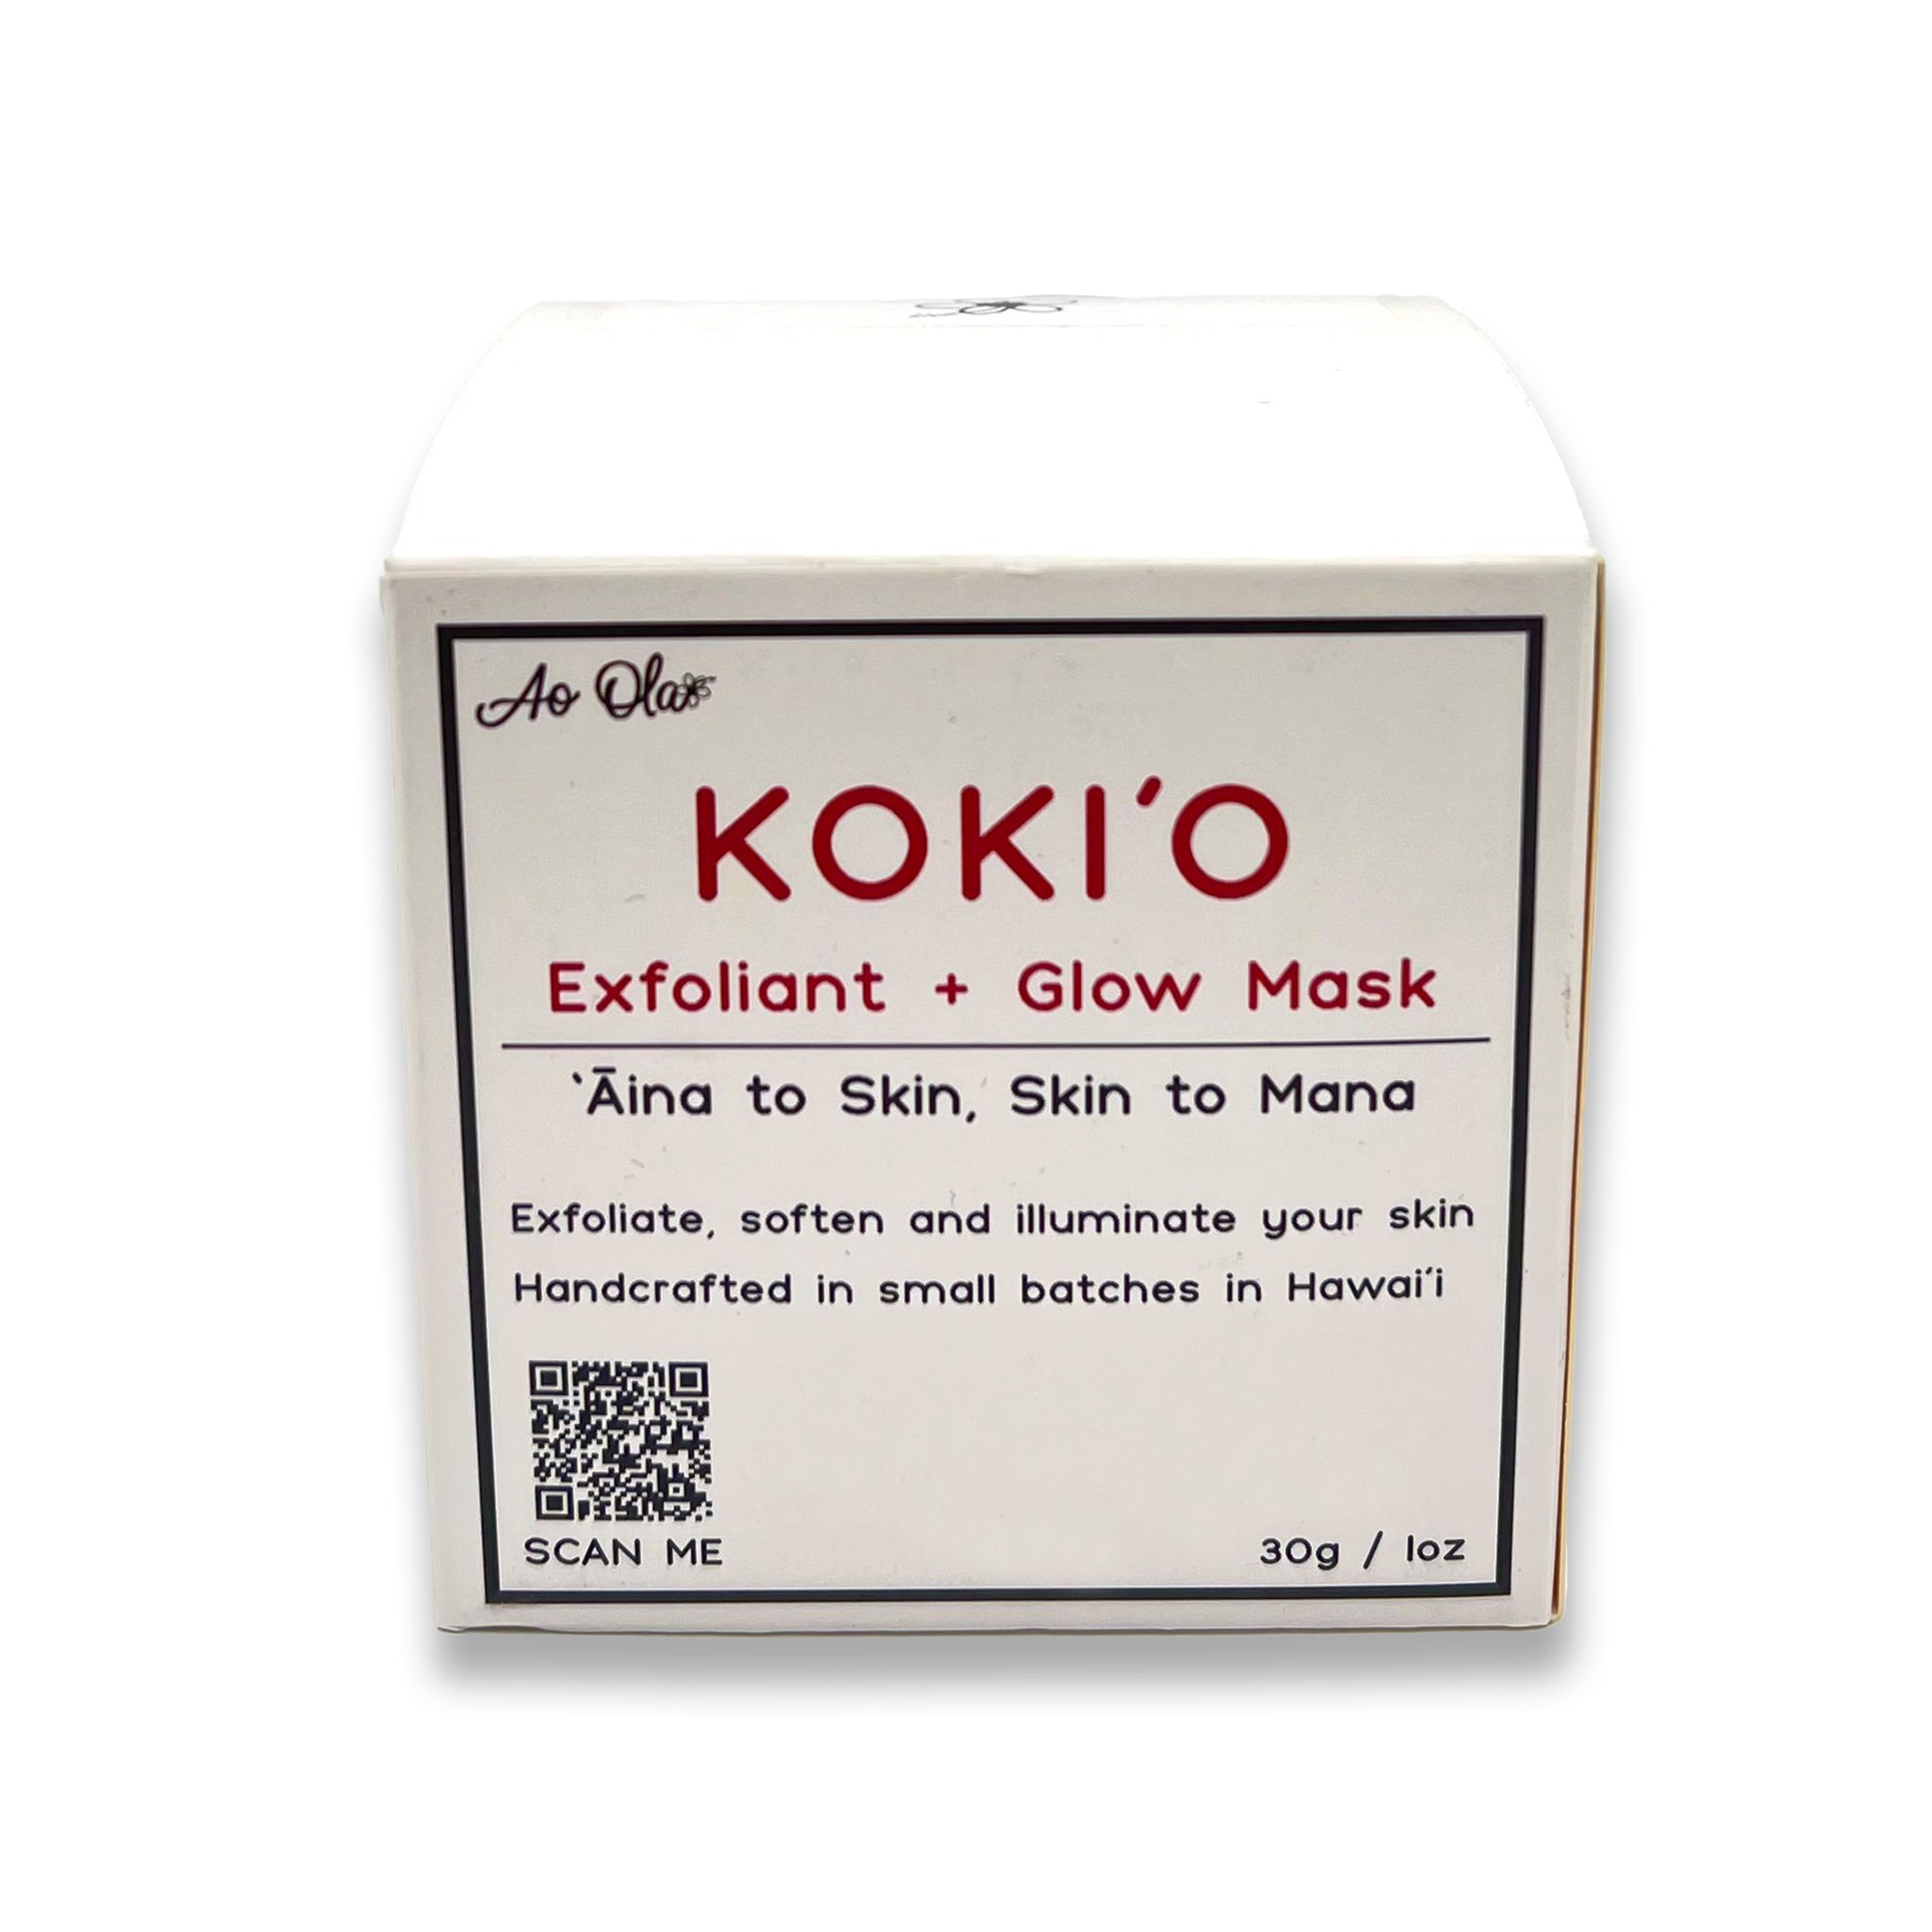 Pop-Up Mākeke - Botanica Skincare - KOKIʻO Exfoliant  Glow Mask - Packaged